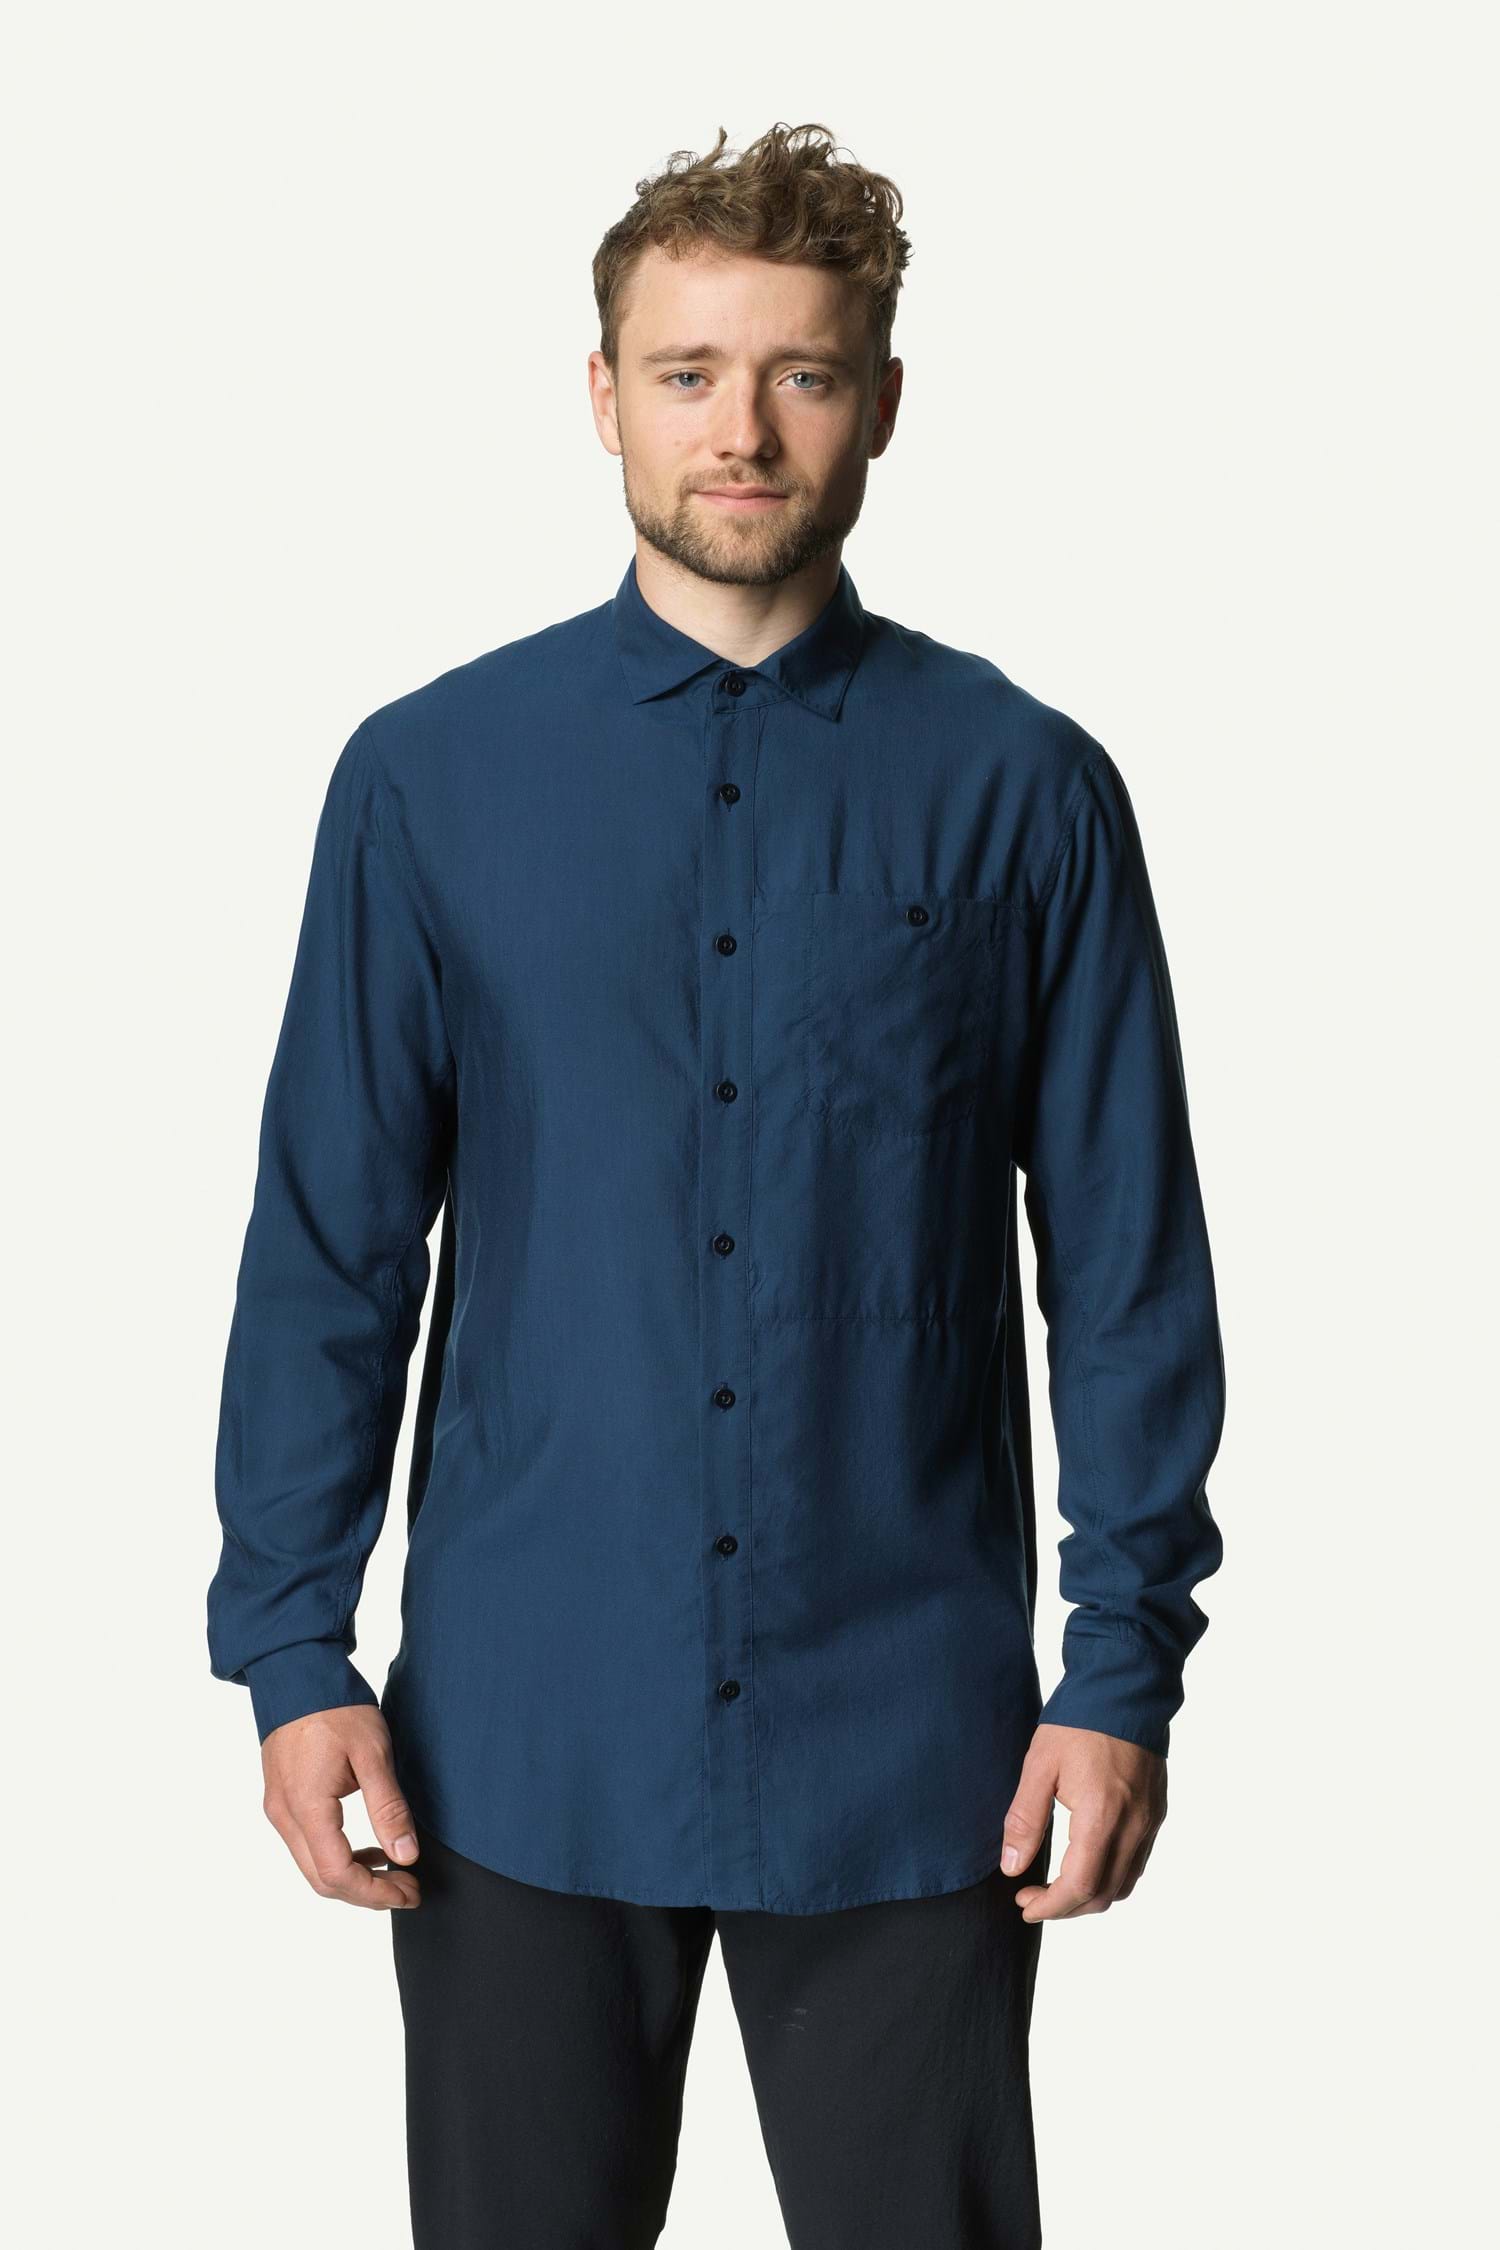 Shop Men's Shirts & Tops for Sports | Houdini Sportswear